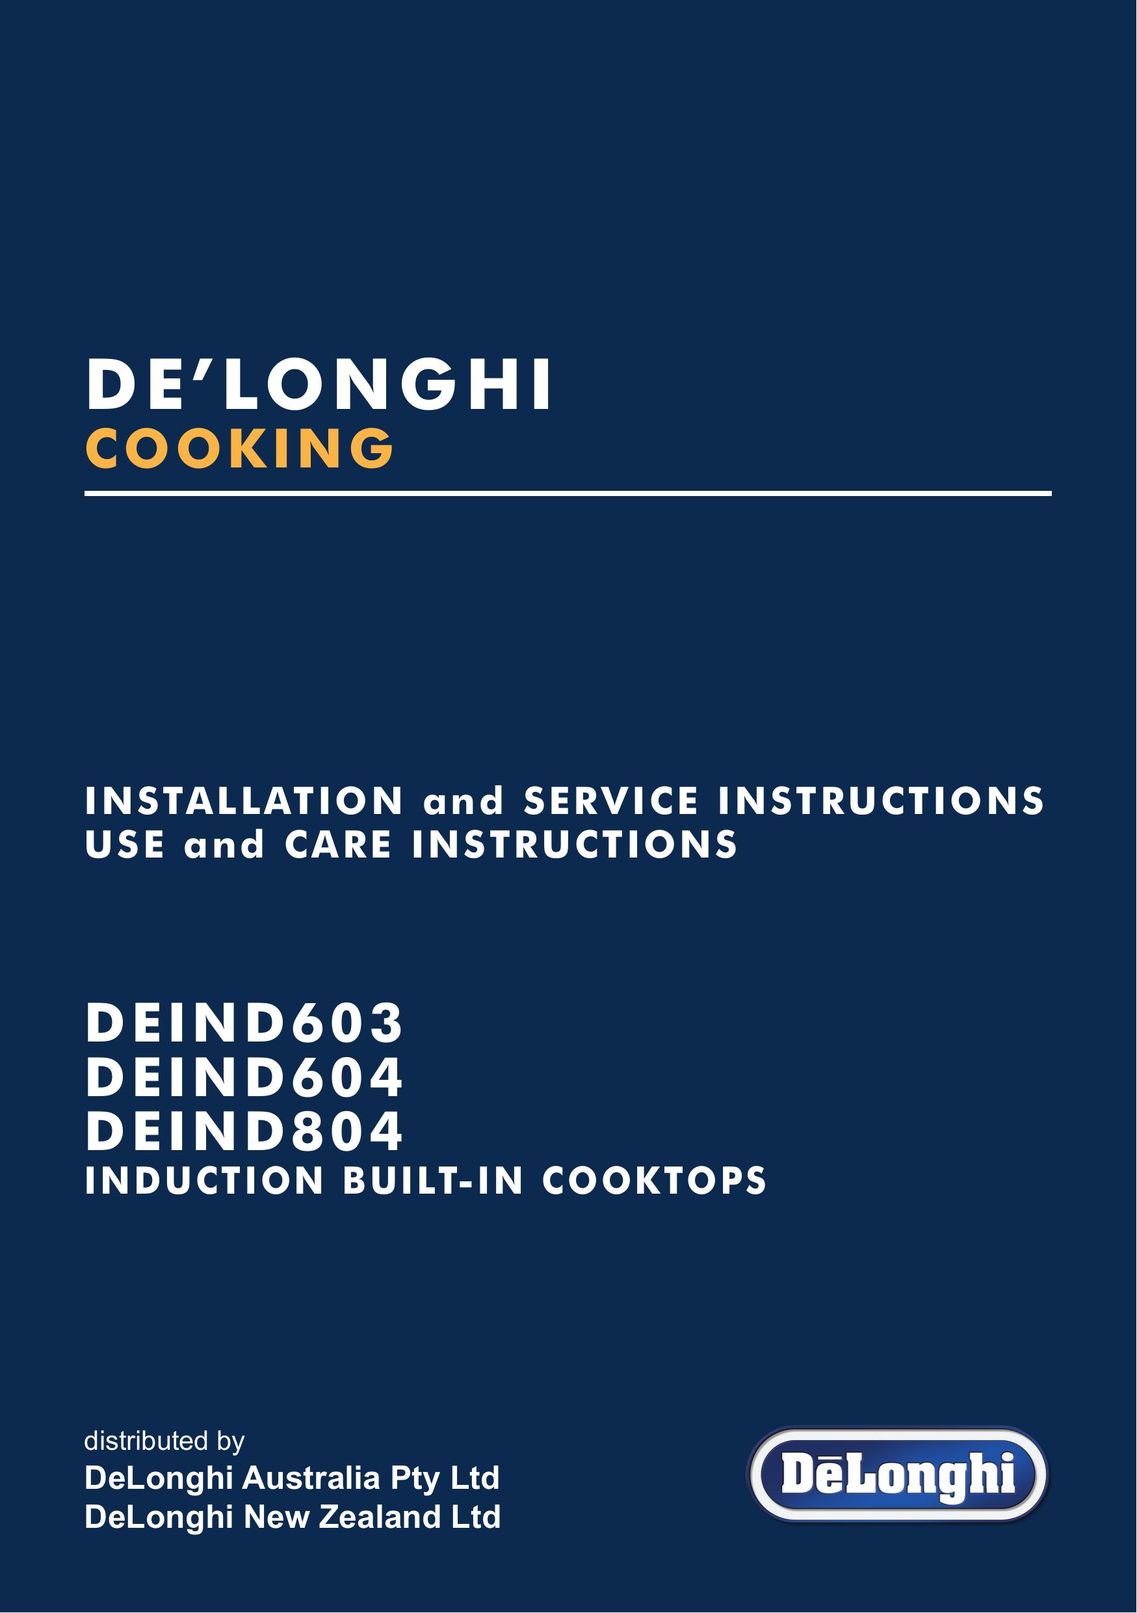 DeLonghi DEIND603 Cooktop User Manual